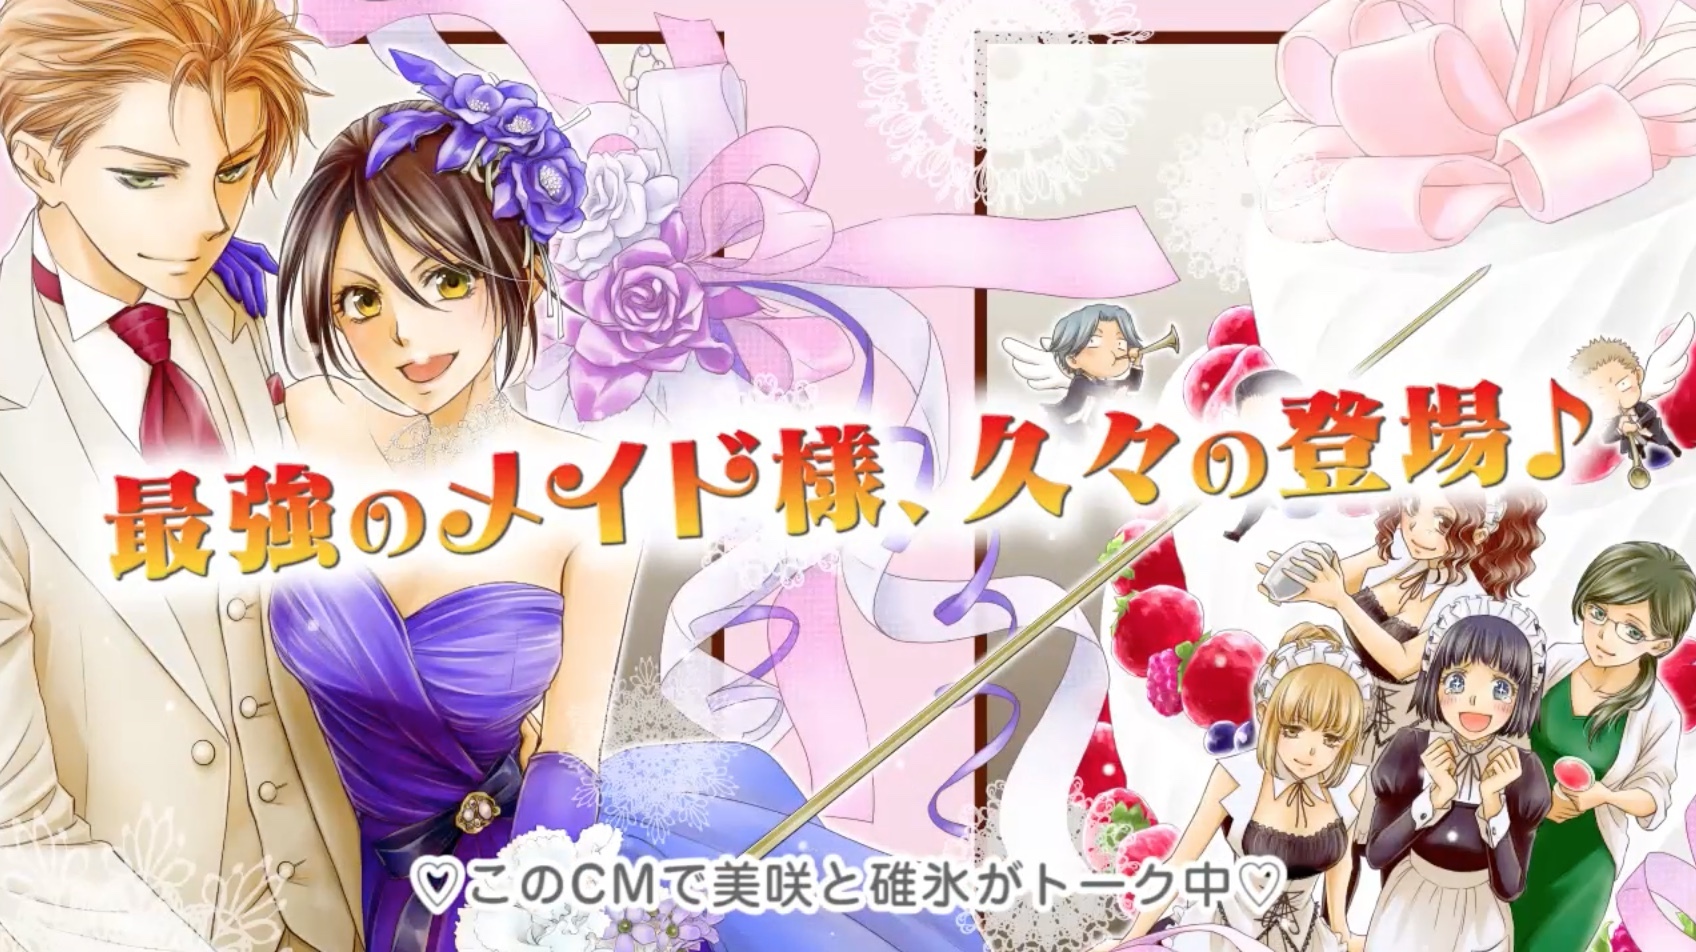 Limited BOX Kaichou wa Maid Sama Mariage Vol.1 Japanese Manga W/Tracking Number